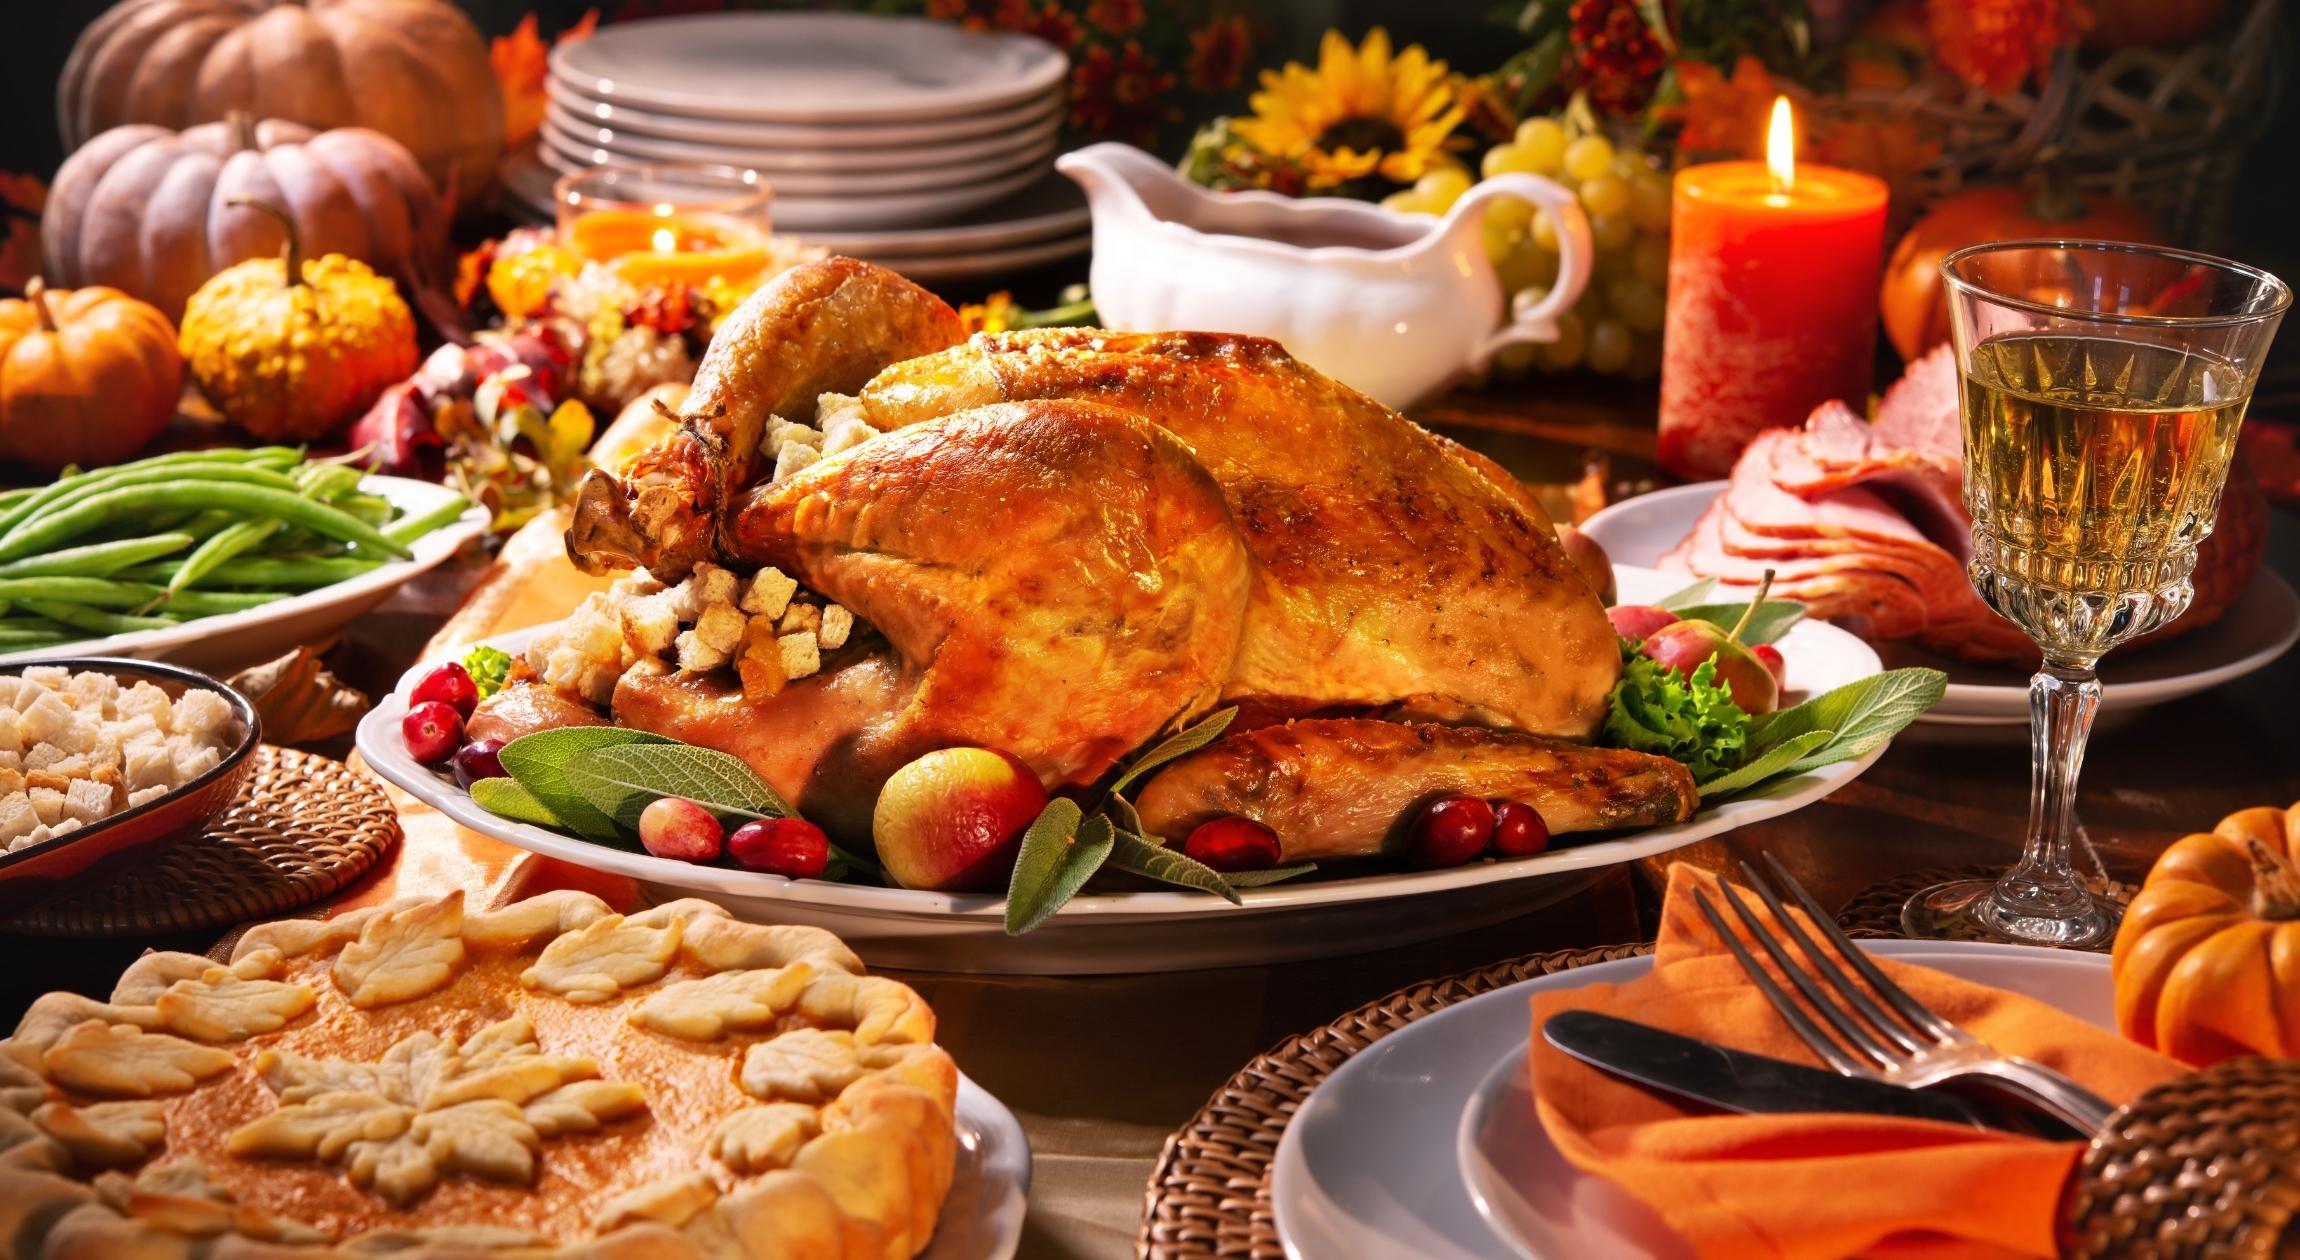 A Thanksgiving dinner spread